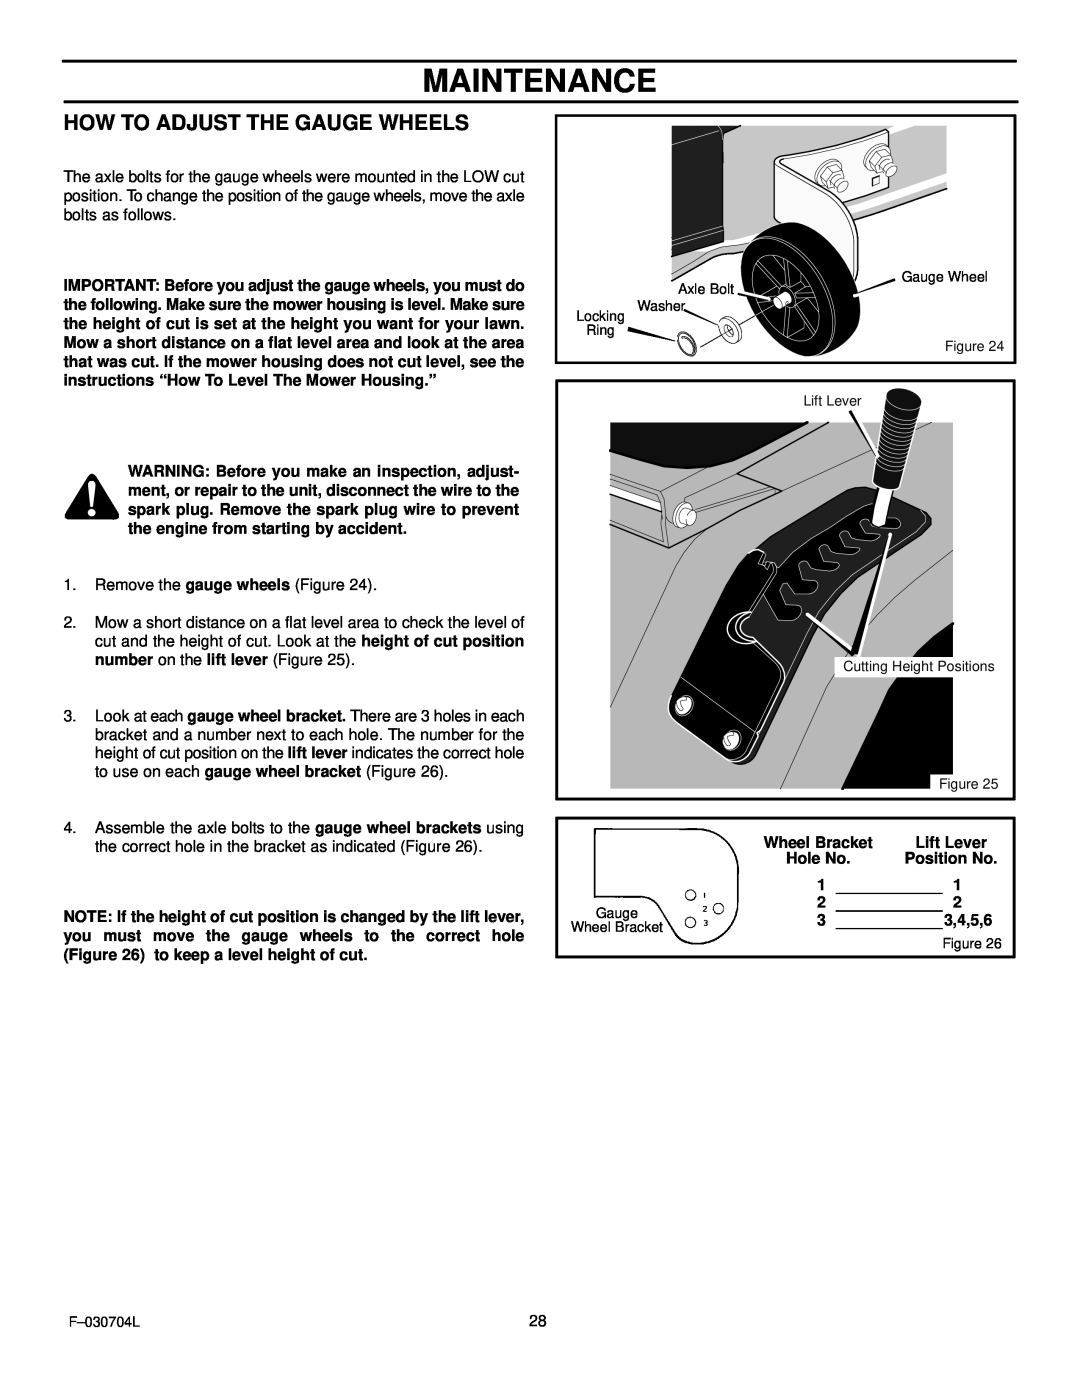 Murray 425303x92B manual Maintenance, How To Adjust The Gauge Wheels 